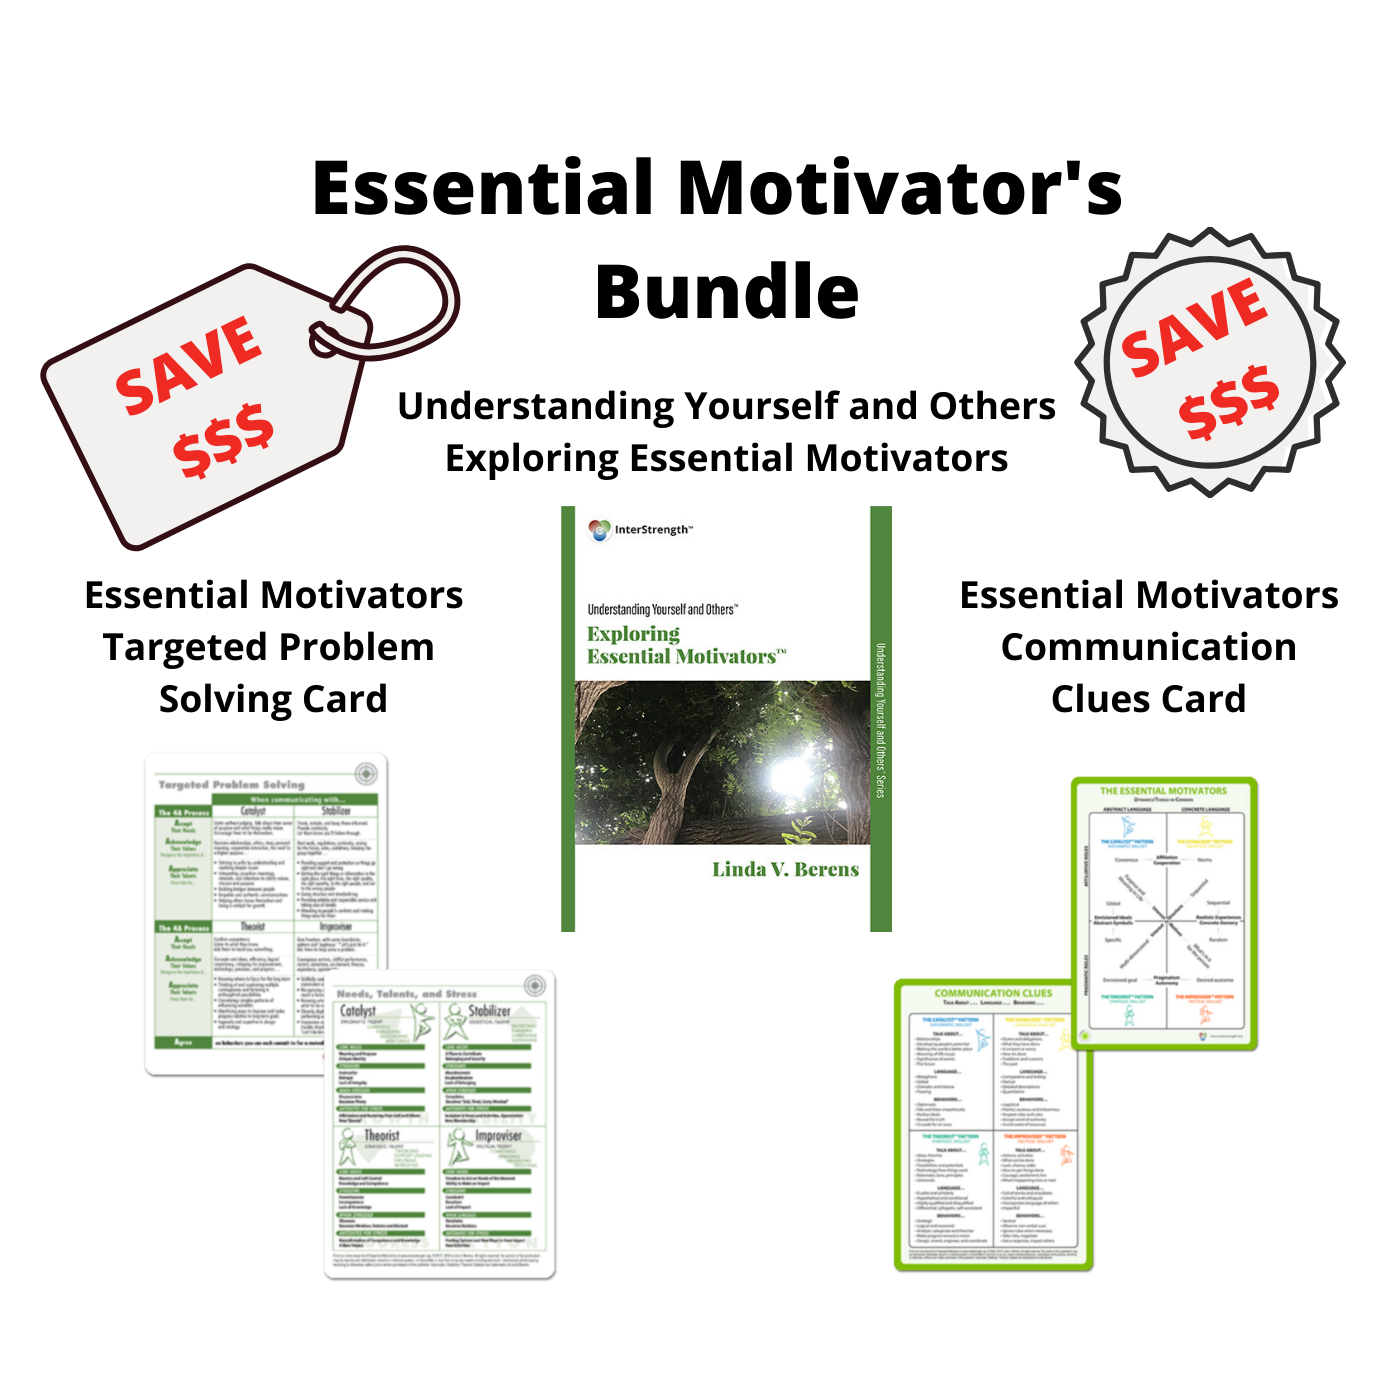 Essential Motivator's Bundle